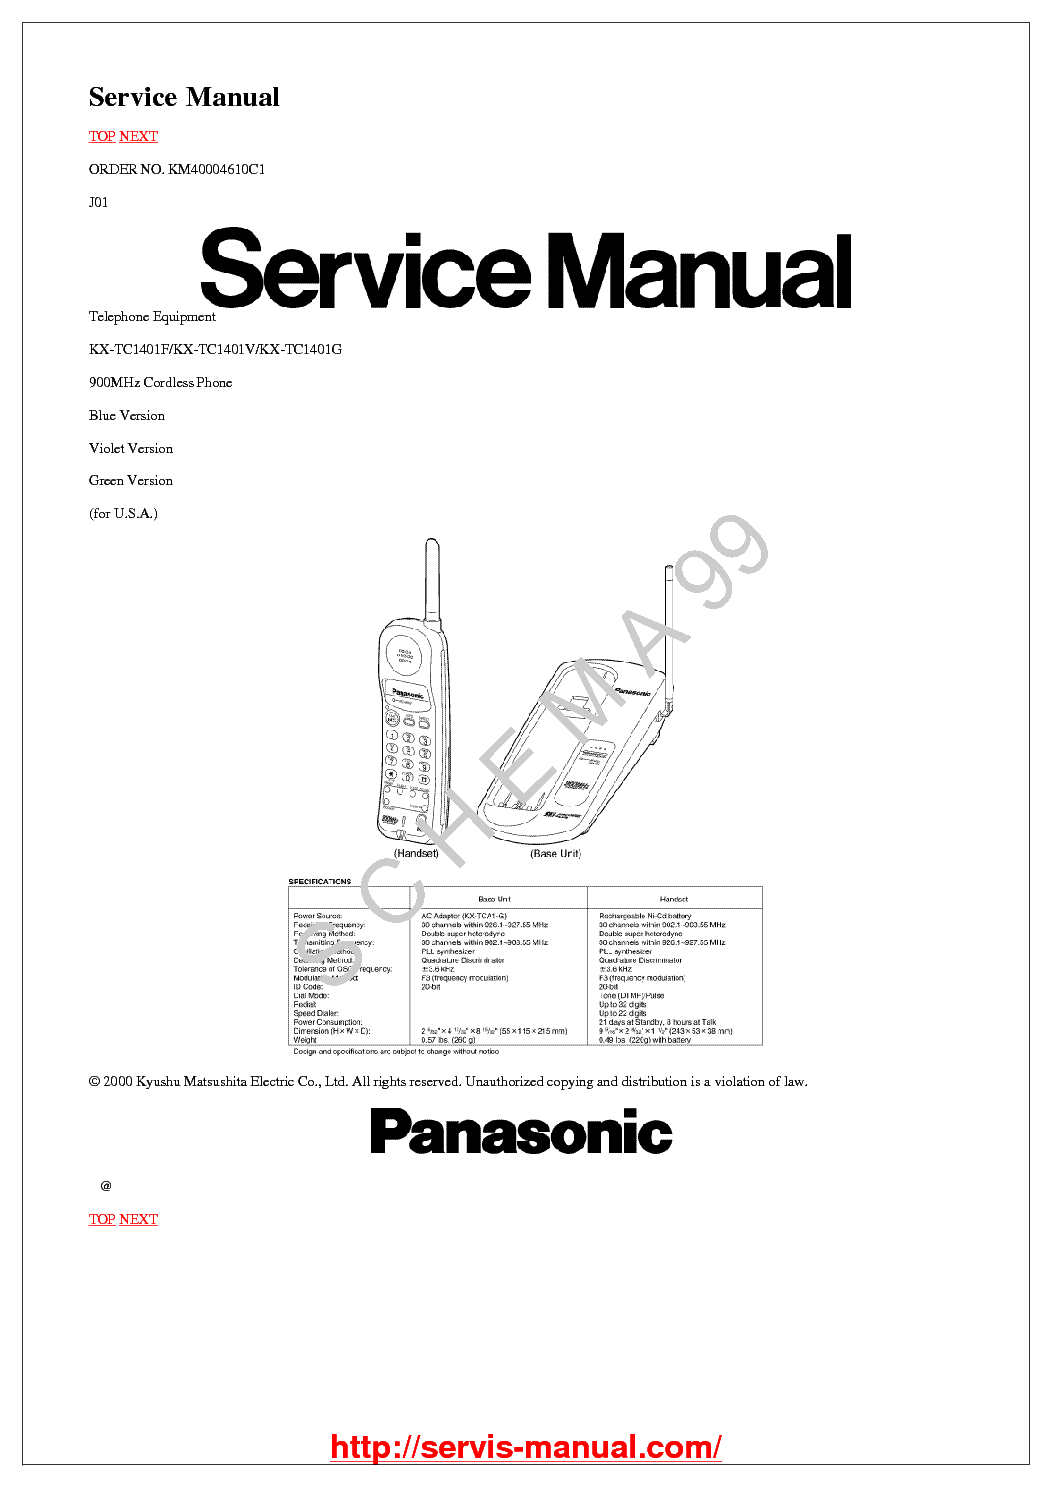 Panasonic kx tc1401 инструкция